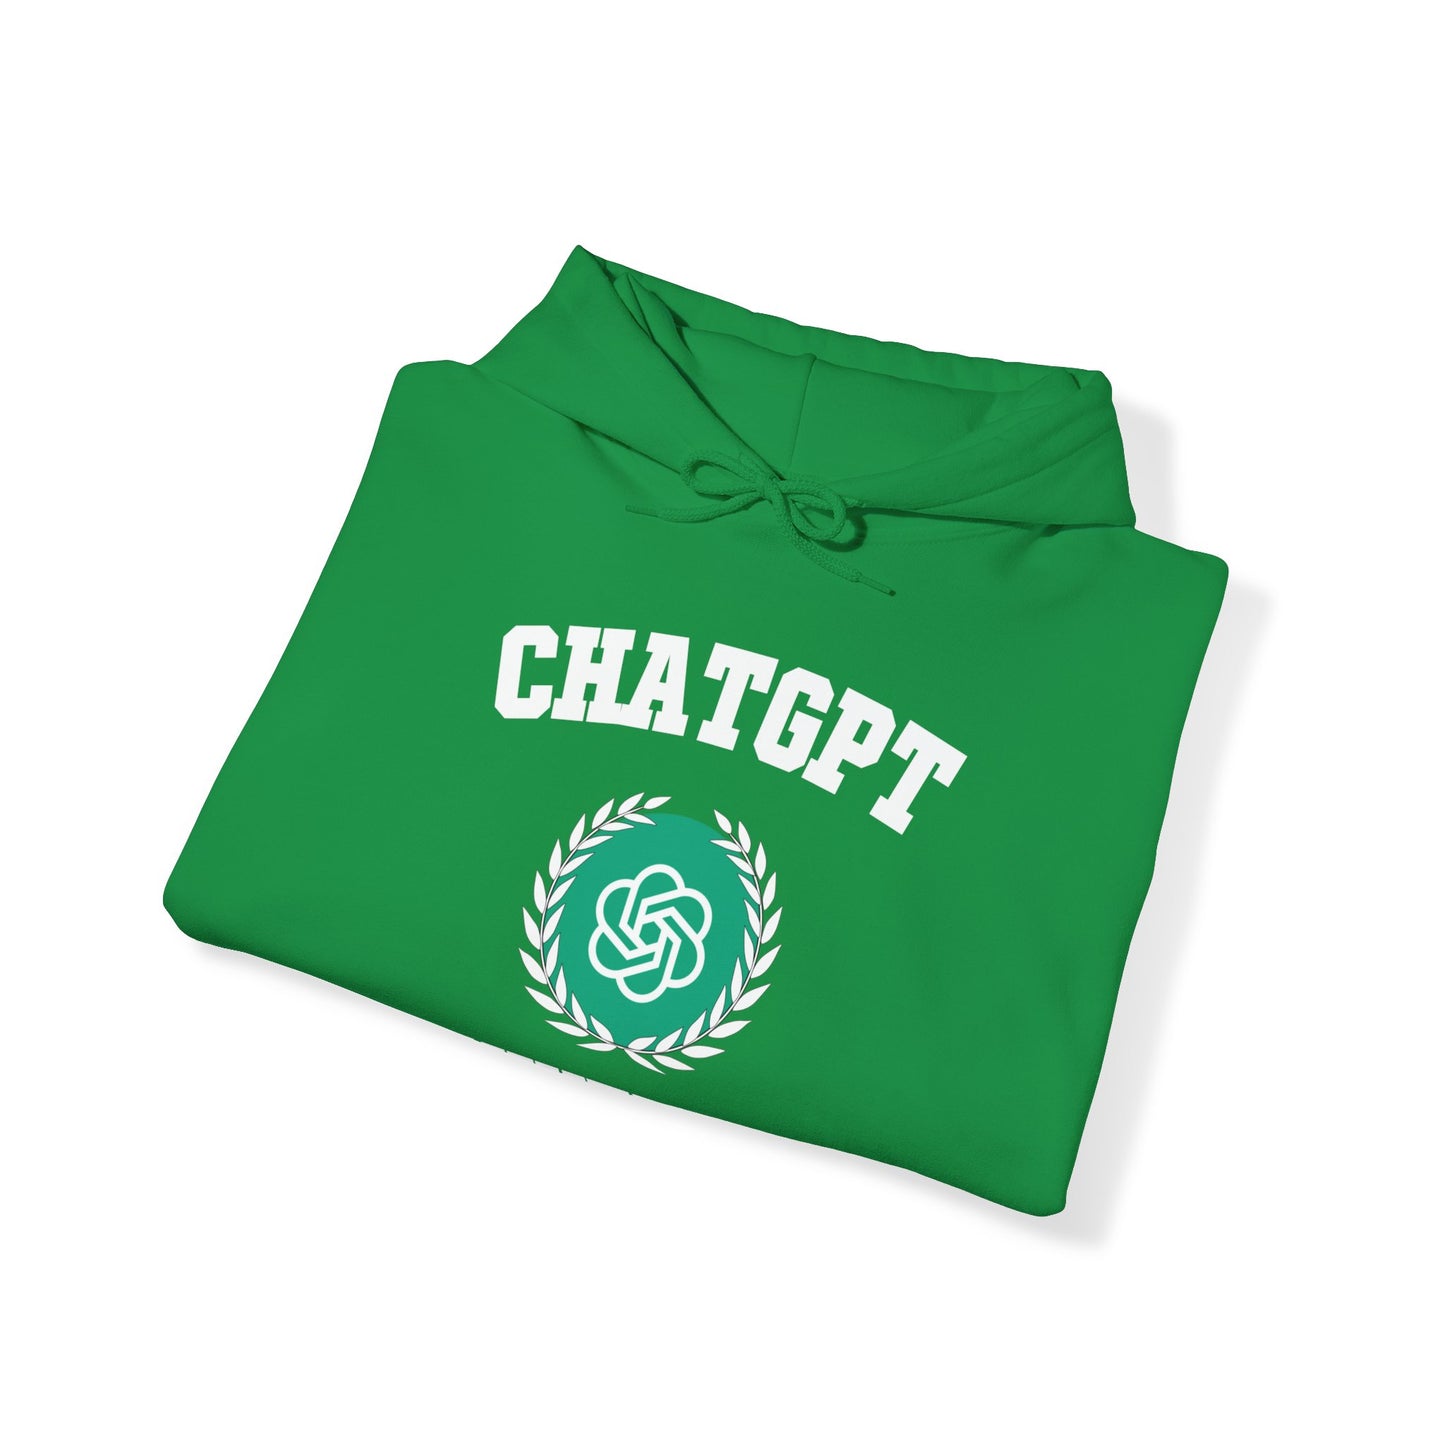 "ChatGPT University" - Hoodie